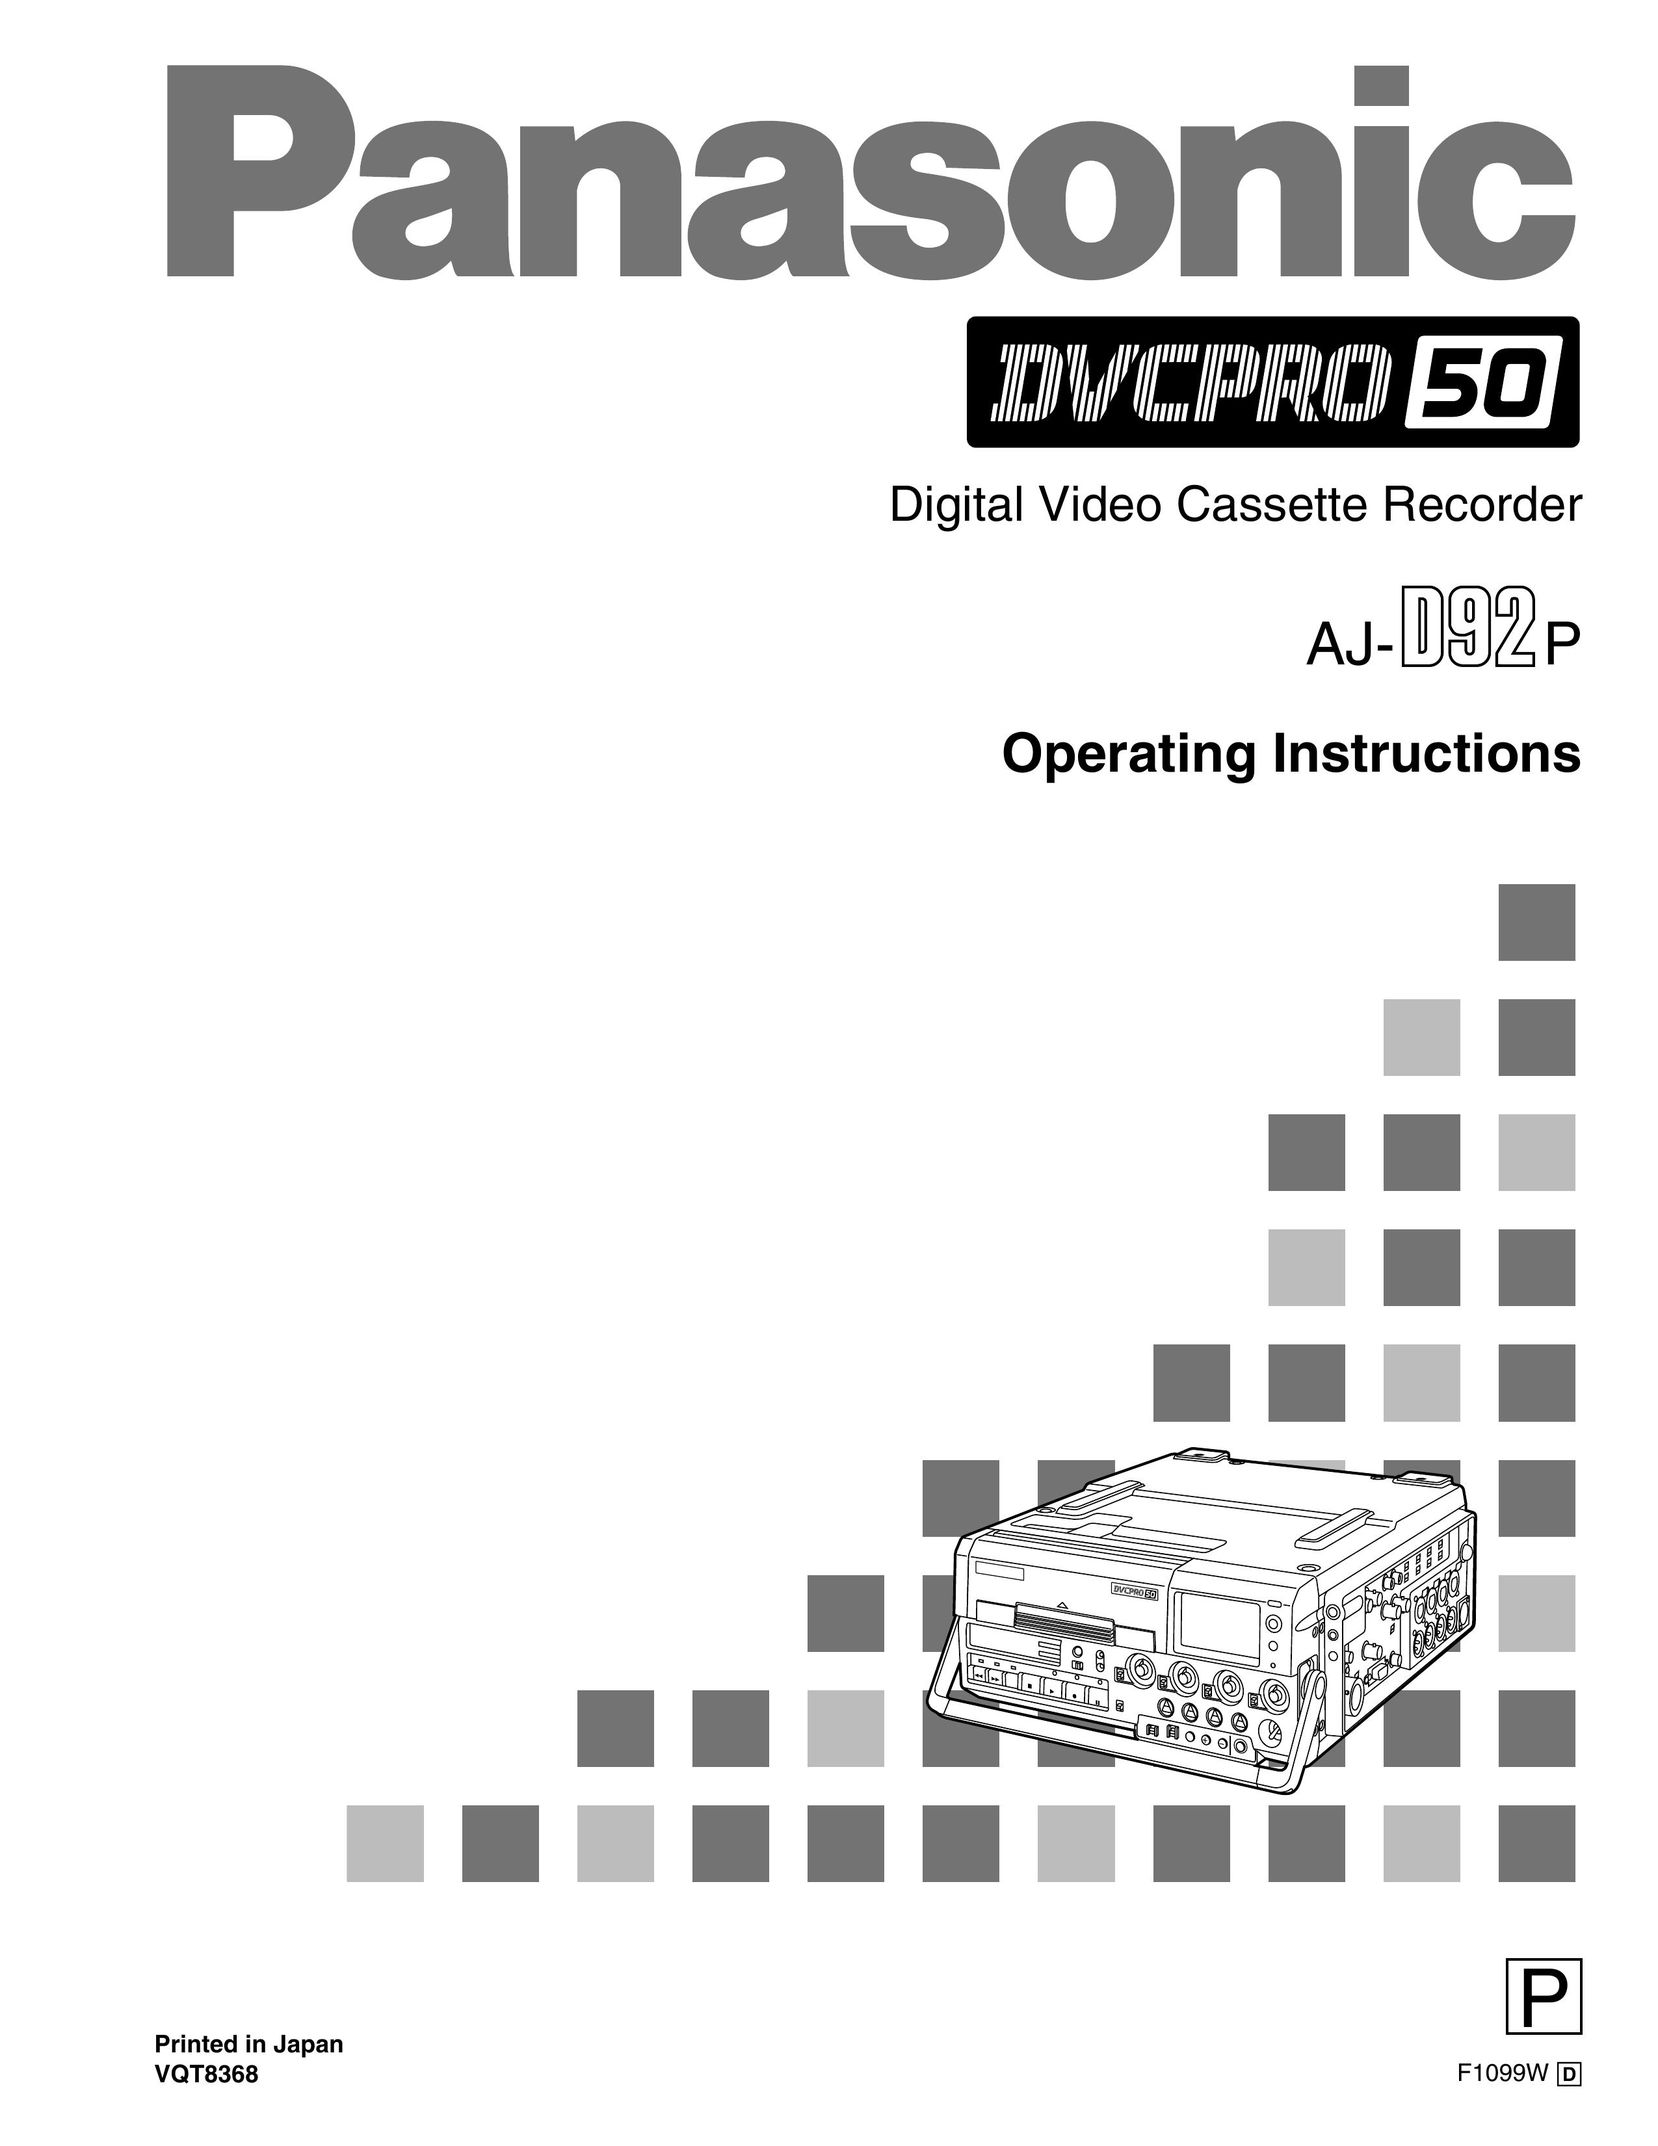 Panasonic AJ-D92P VCR User Manual